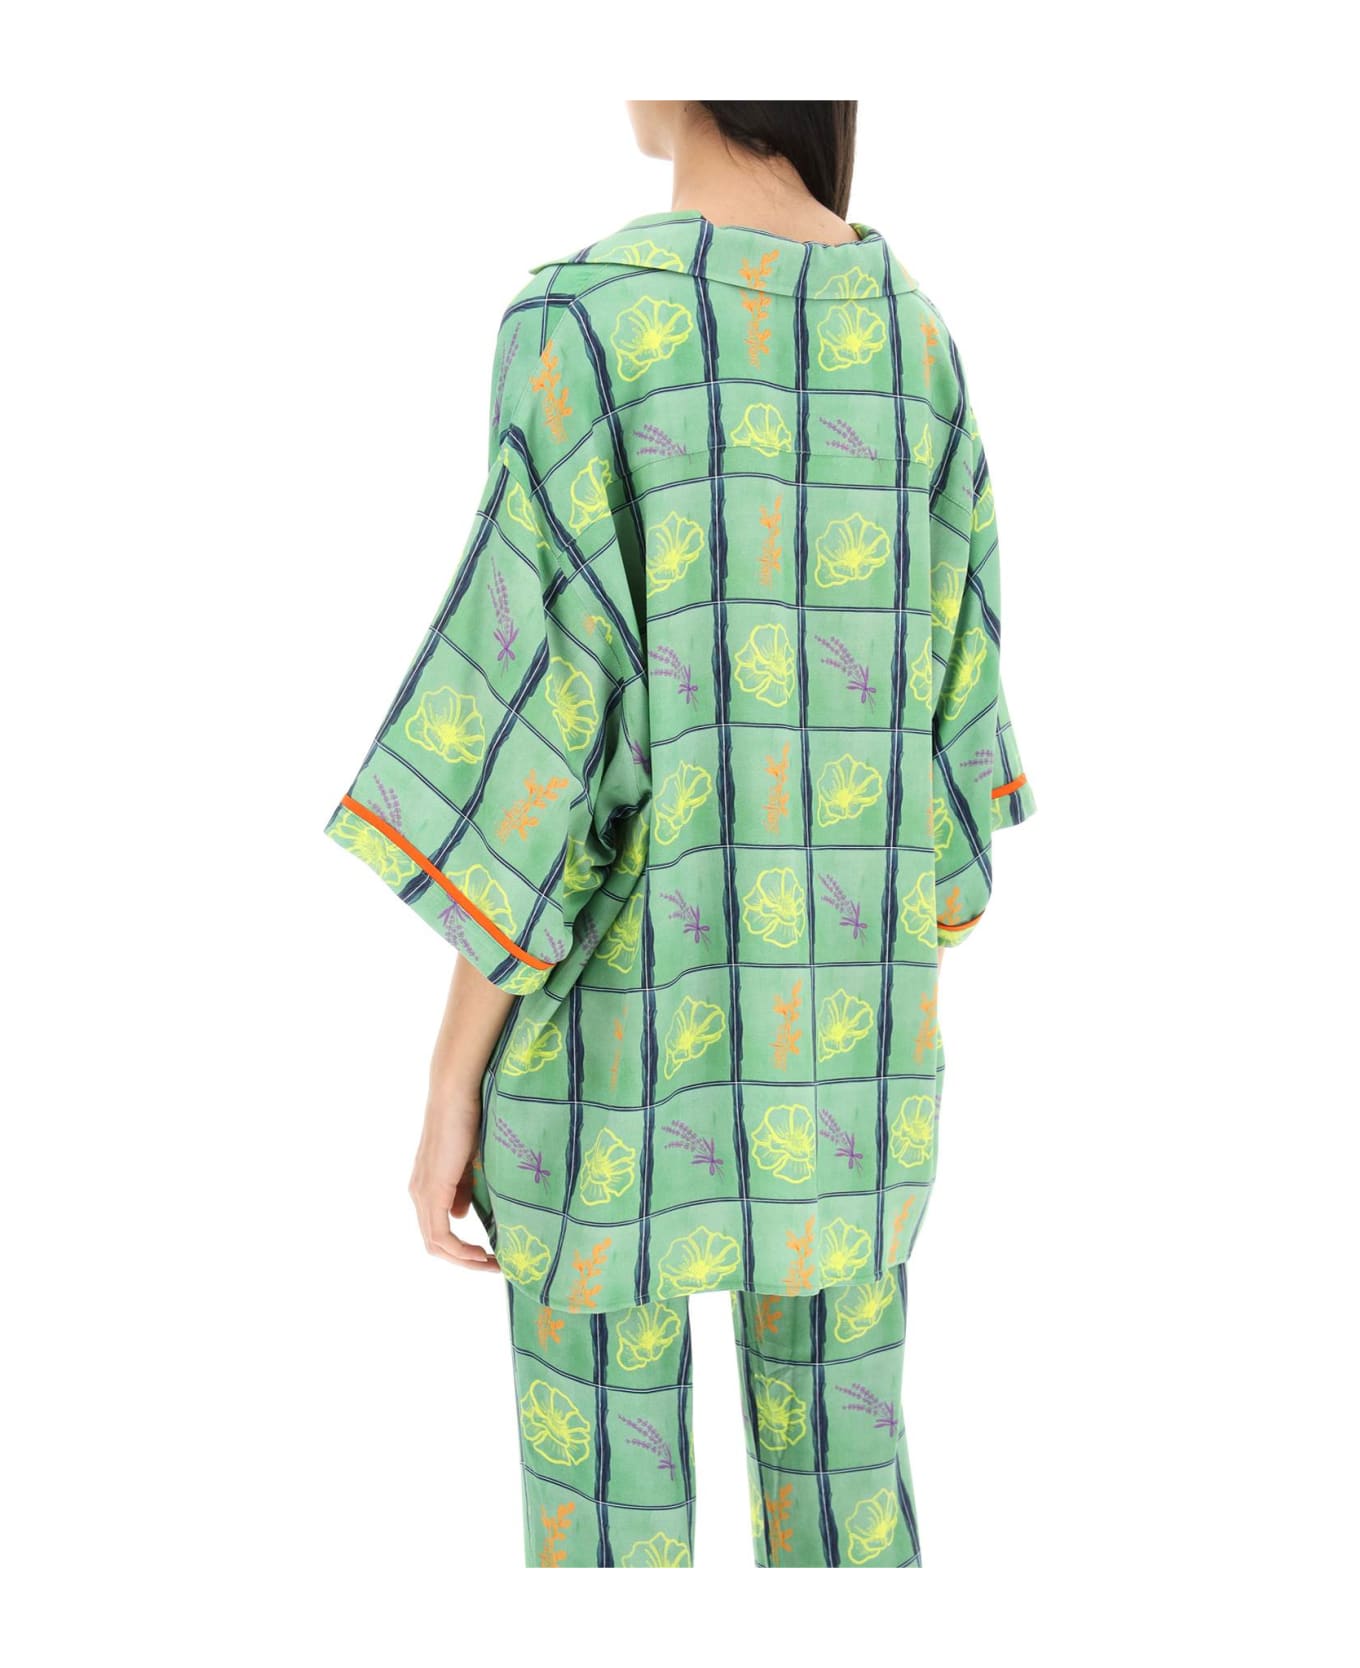 SIEDRES 'malina' Oversized Shirt - MULTI (Green) シャツ